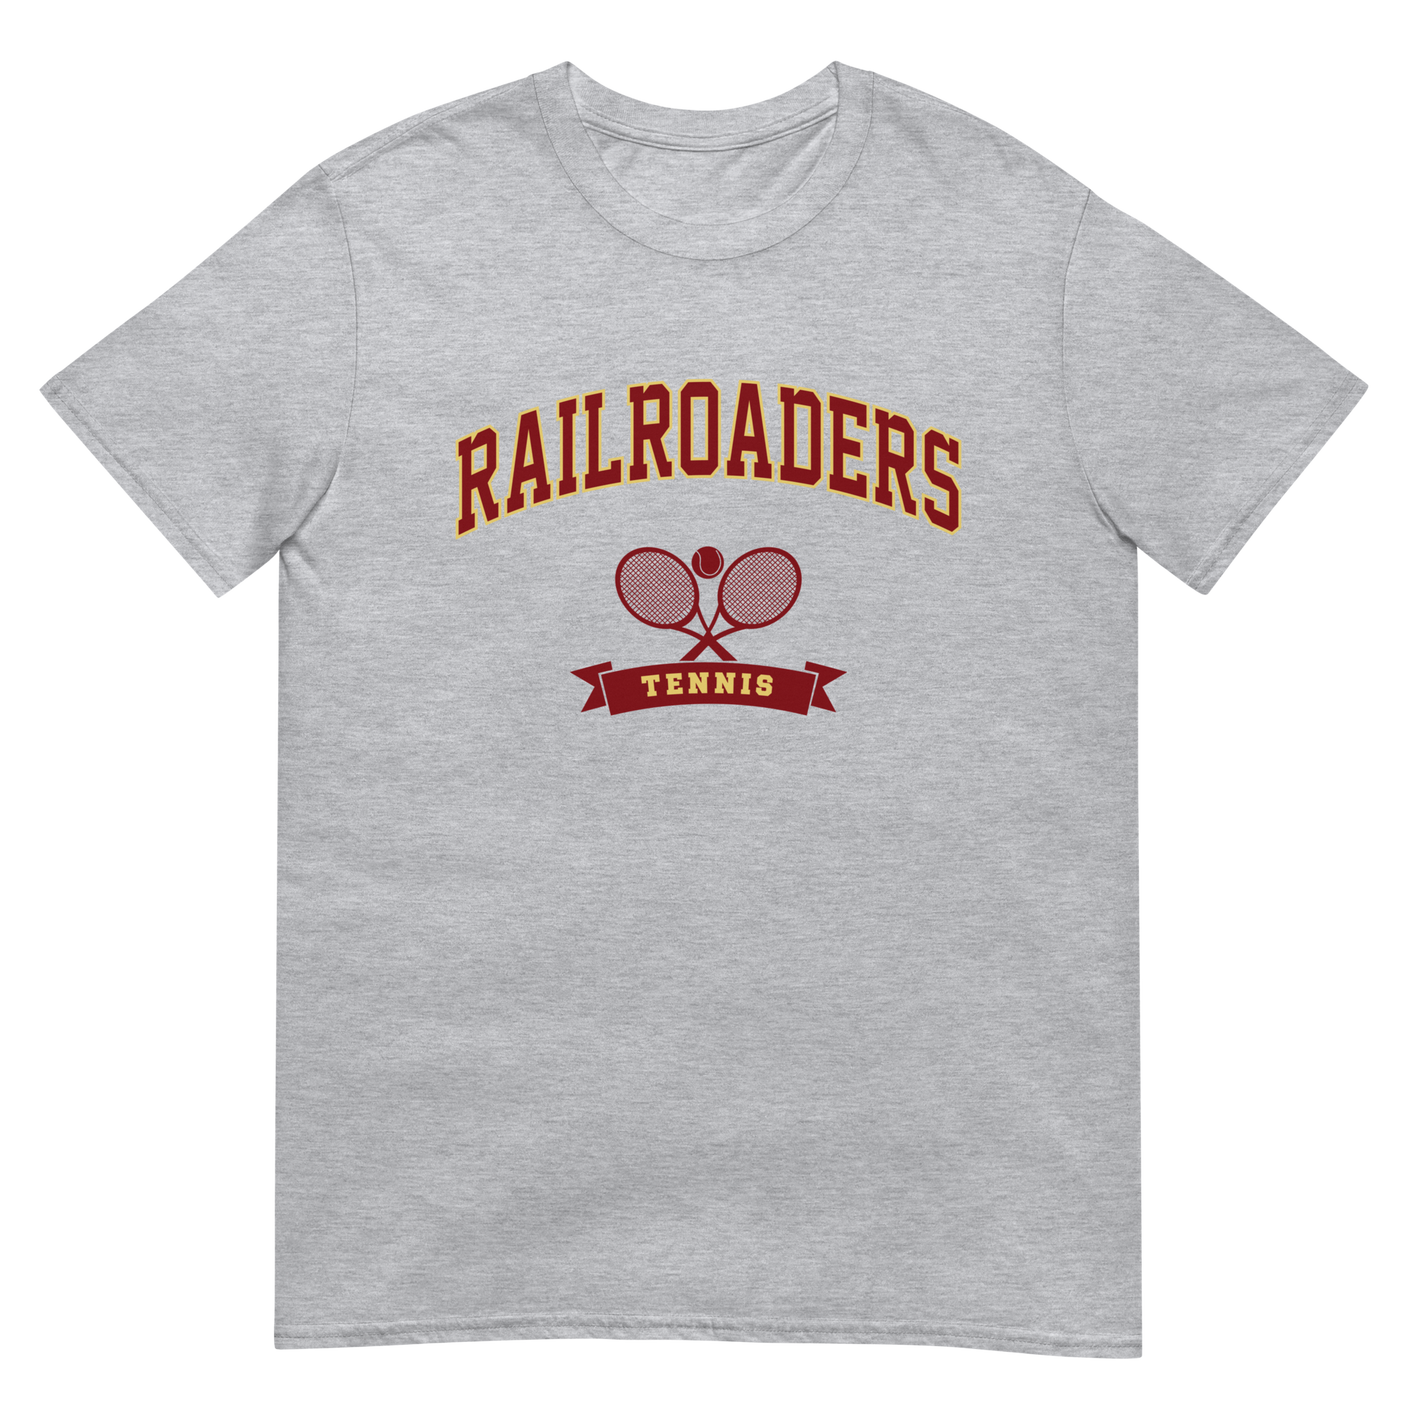 Railroaders Tennis Short-Sleeve Unisex T-Shirt